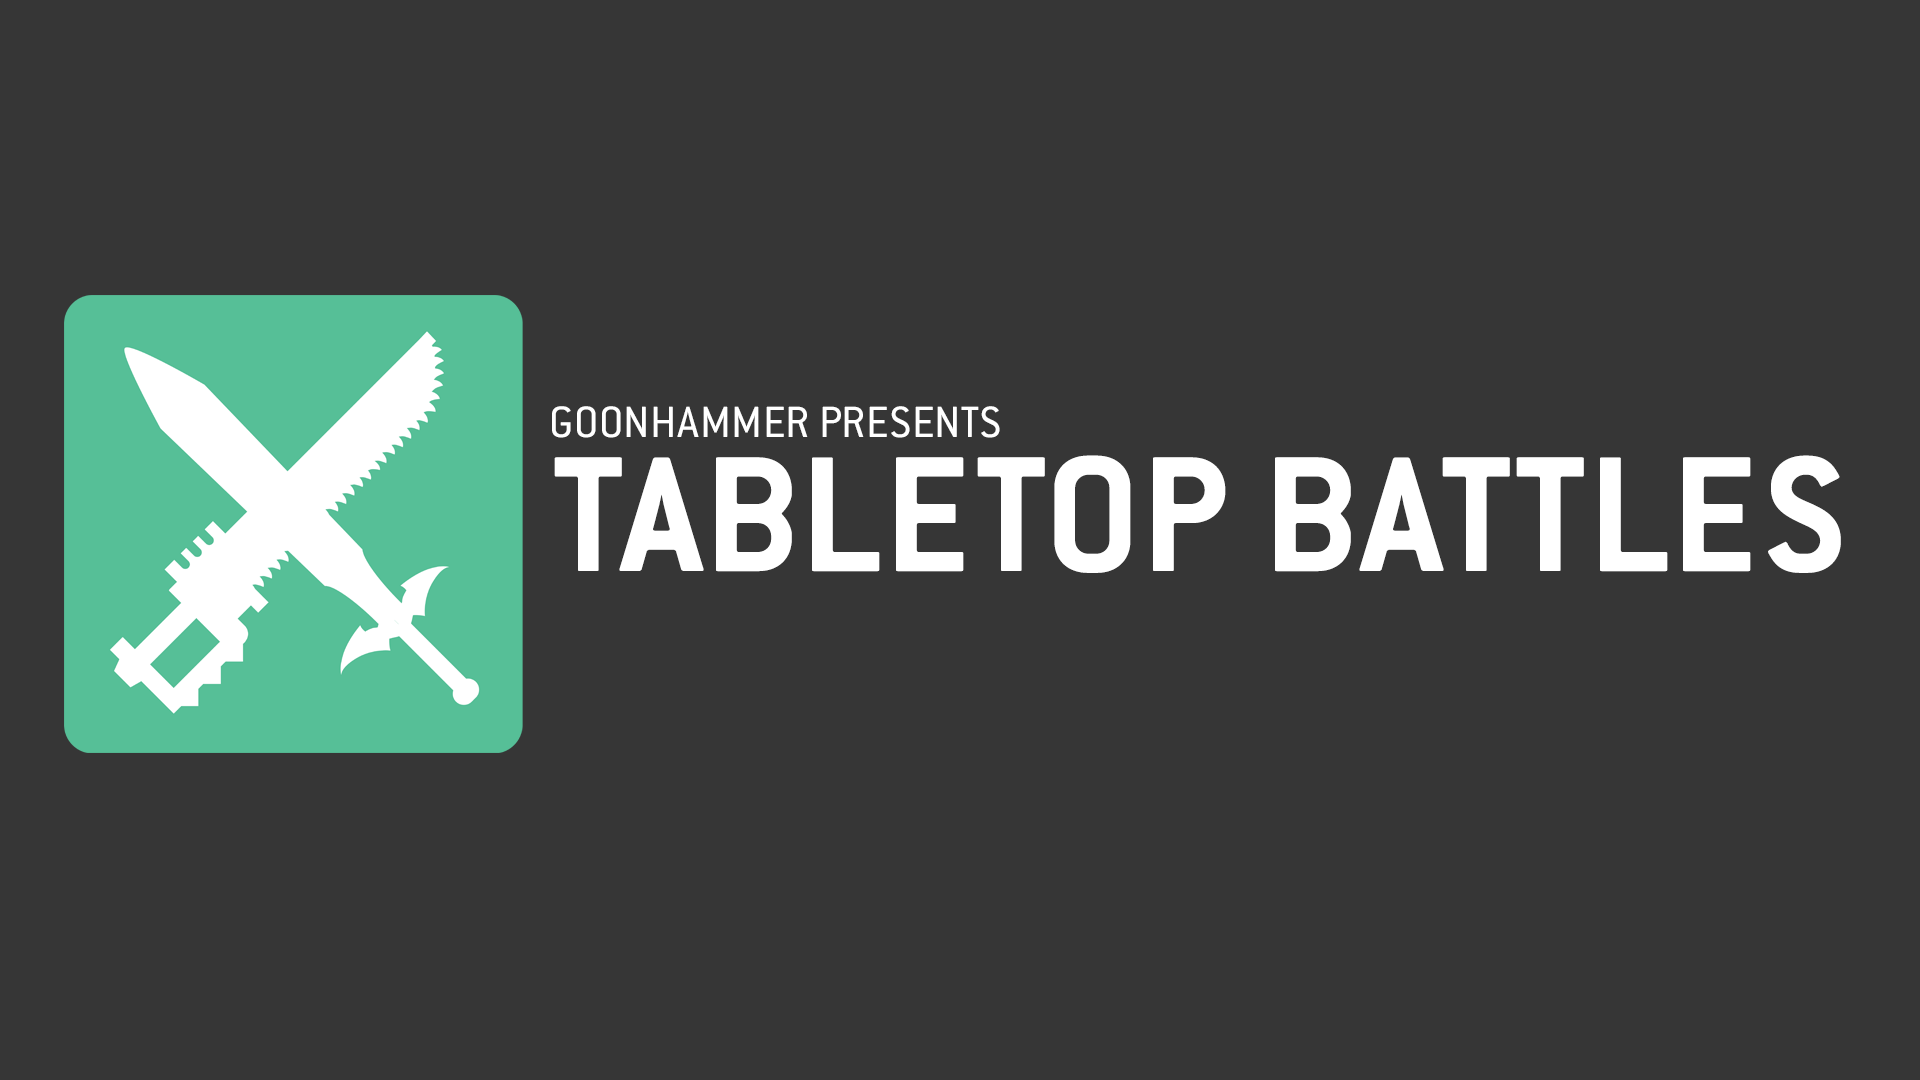 The New Tabletop Battles App Public Beta